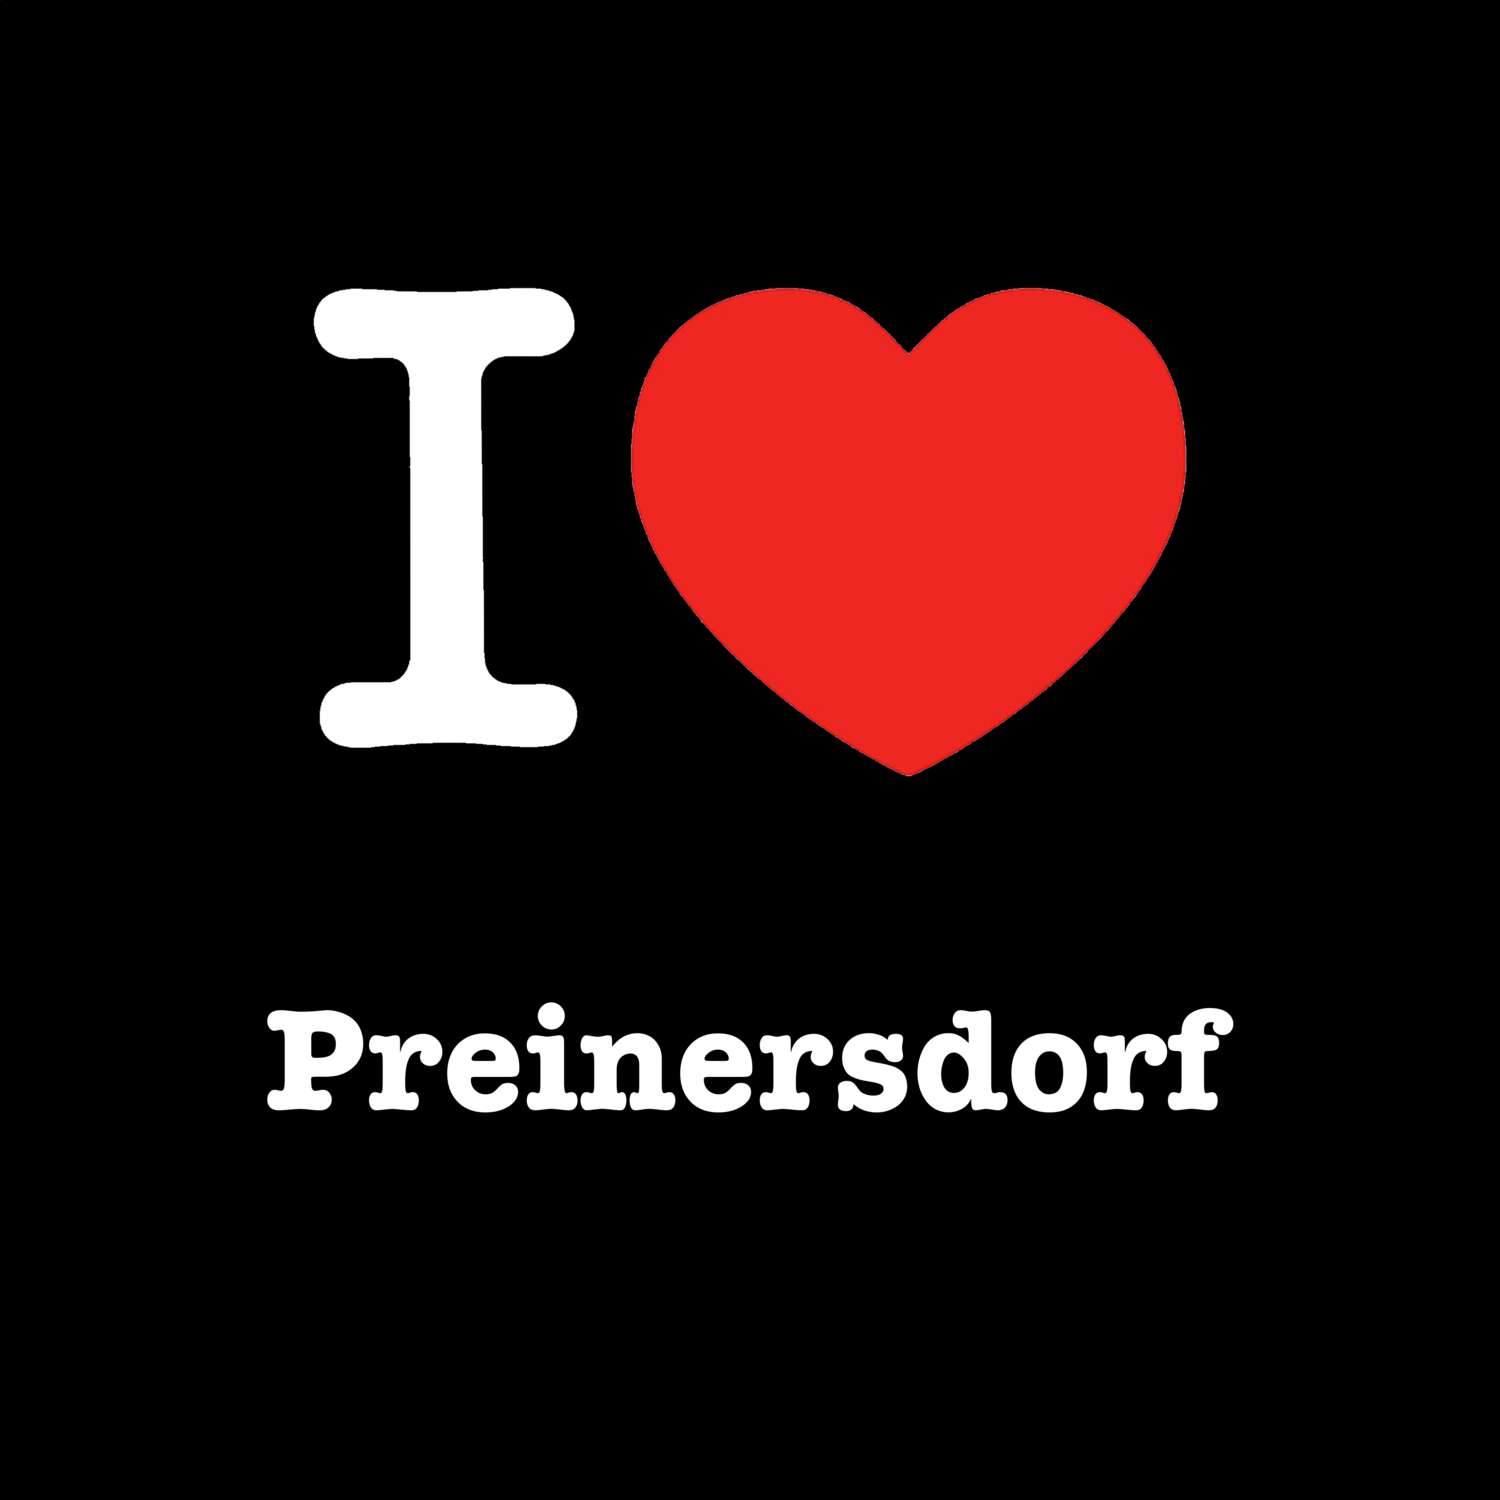 Preinersdorf T-Shirt »I love«